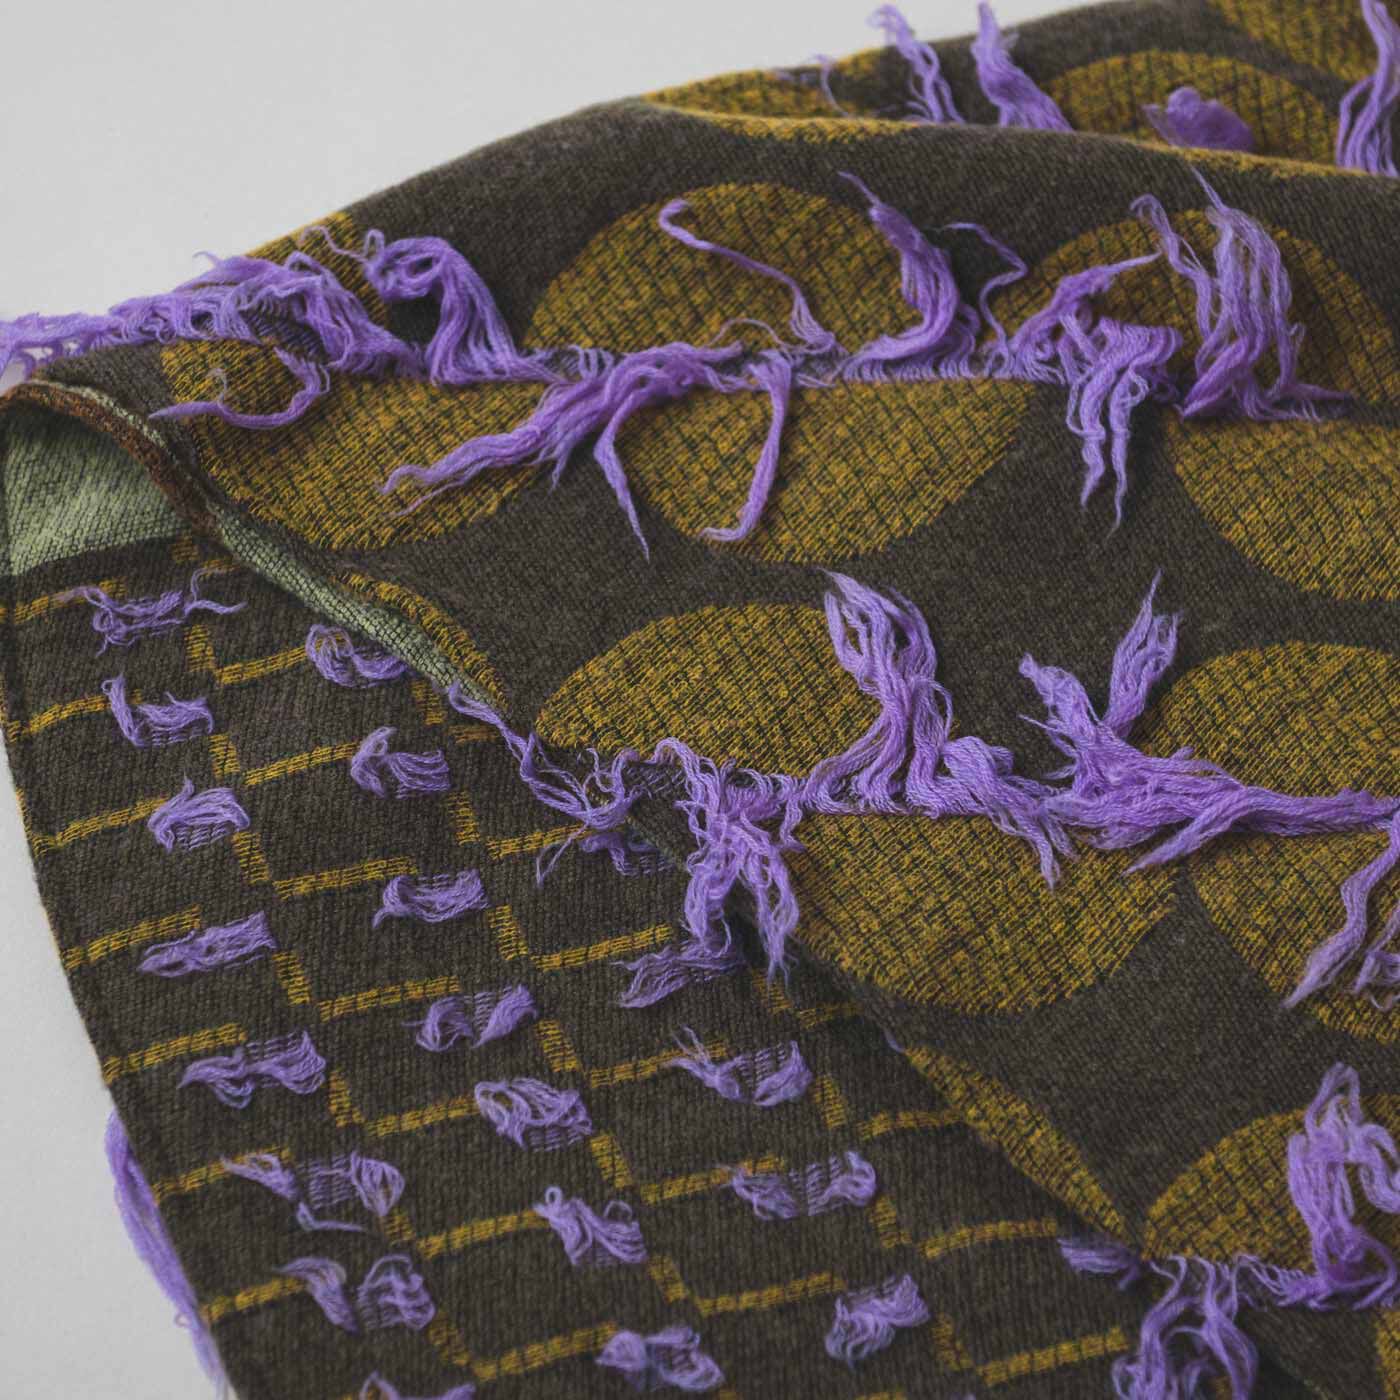 ＆Stories|テキスタイルデザイナーと作った 播州ジャカード織のブークレストール〈ライラック色〉|ヨコ糸をカットし、フリンジのように糸が飛び出ている表面感が特徴です。